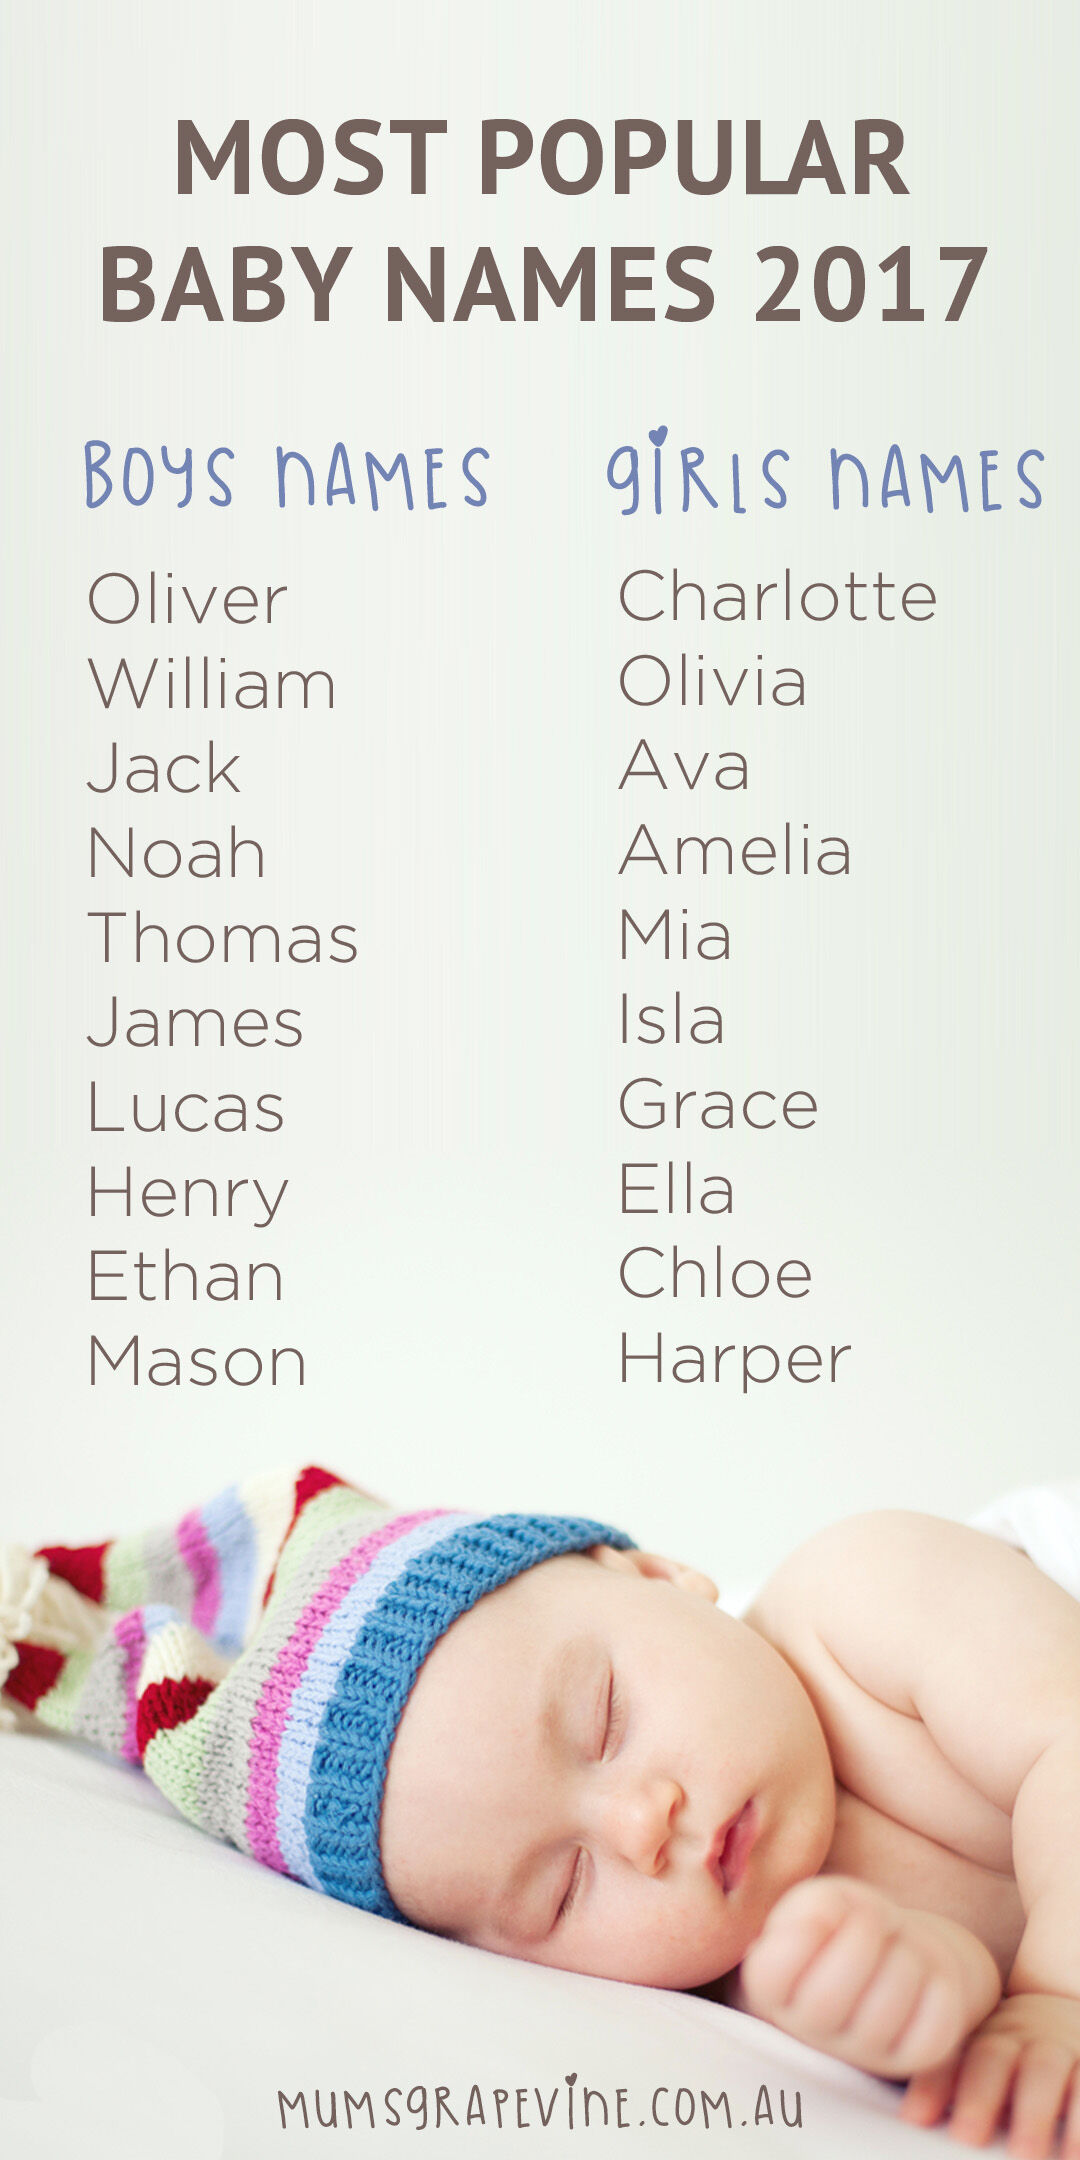 Australia's most popular baby names revealed Mum's Grapevine